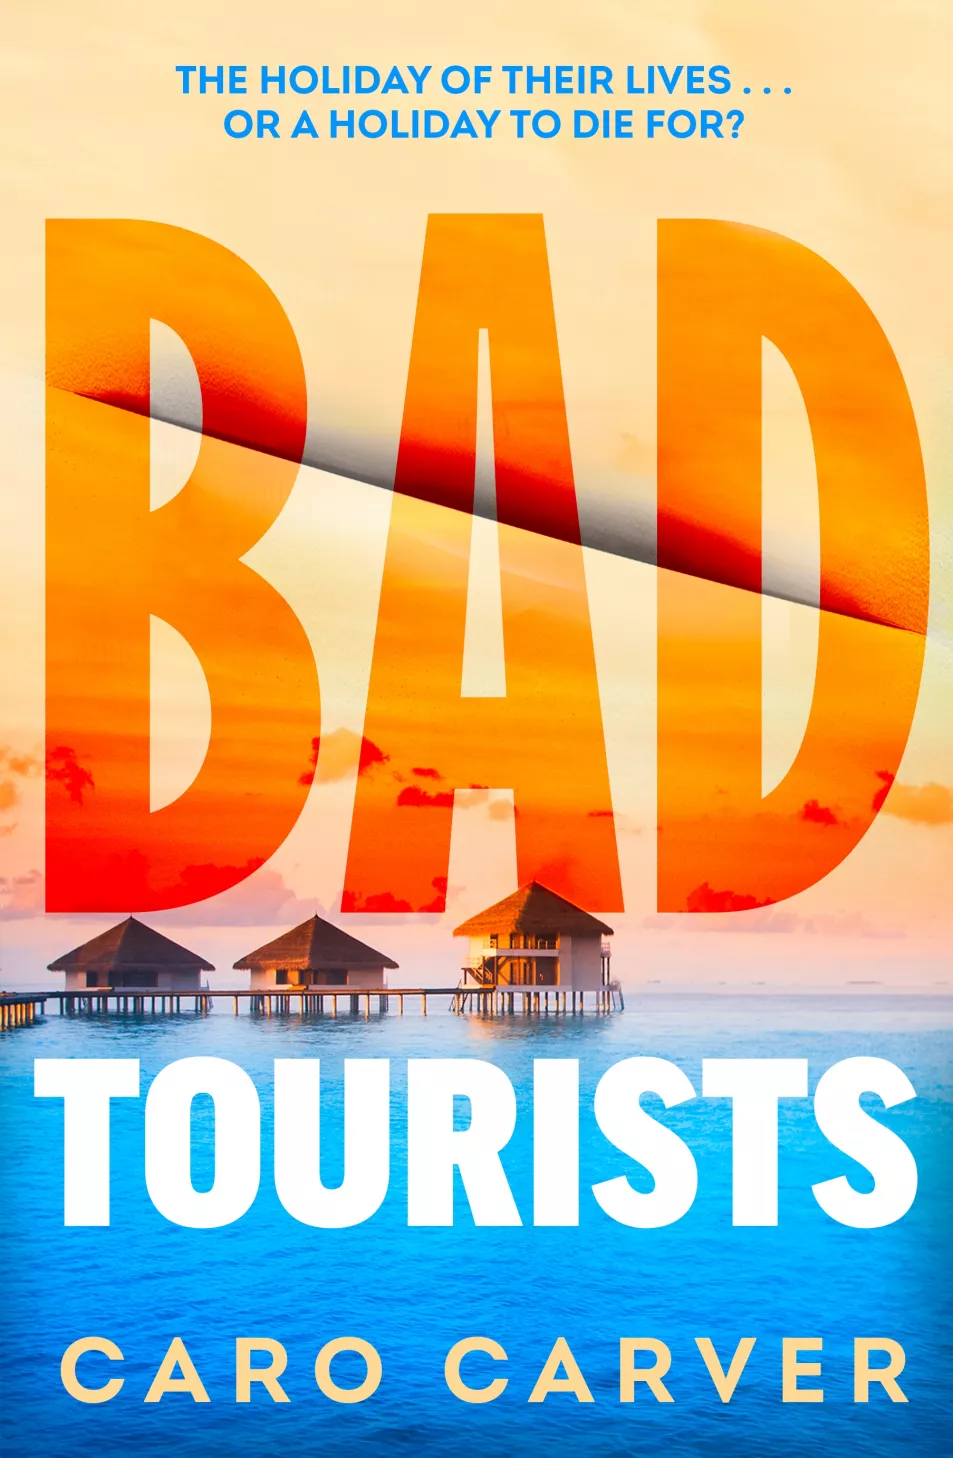 Book jacket of Bad Tourists by Caro Carver (Bantam/PA)